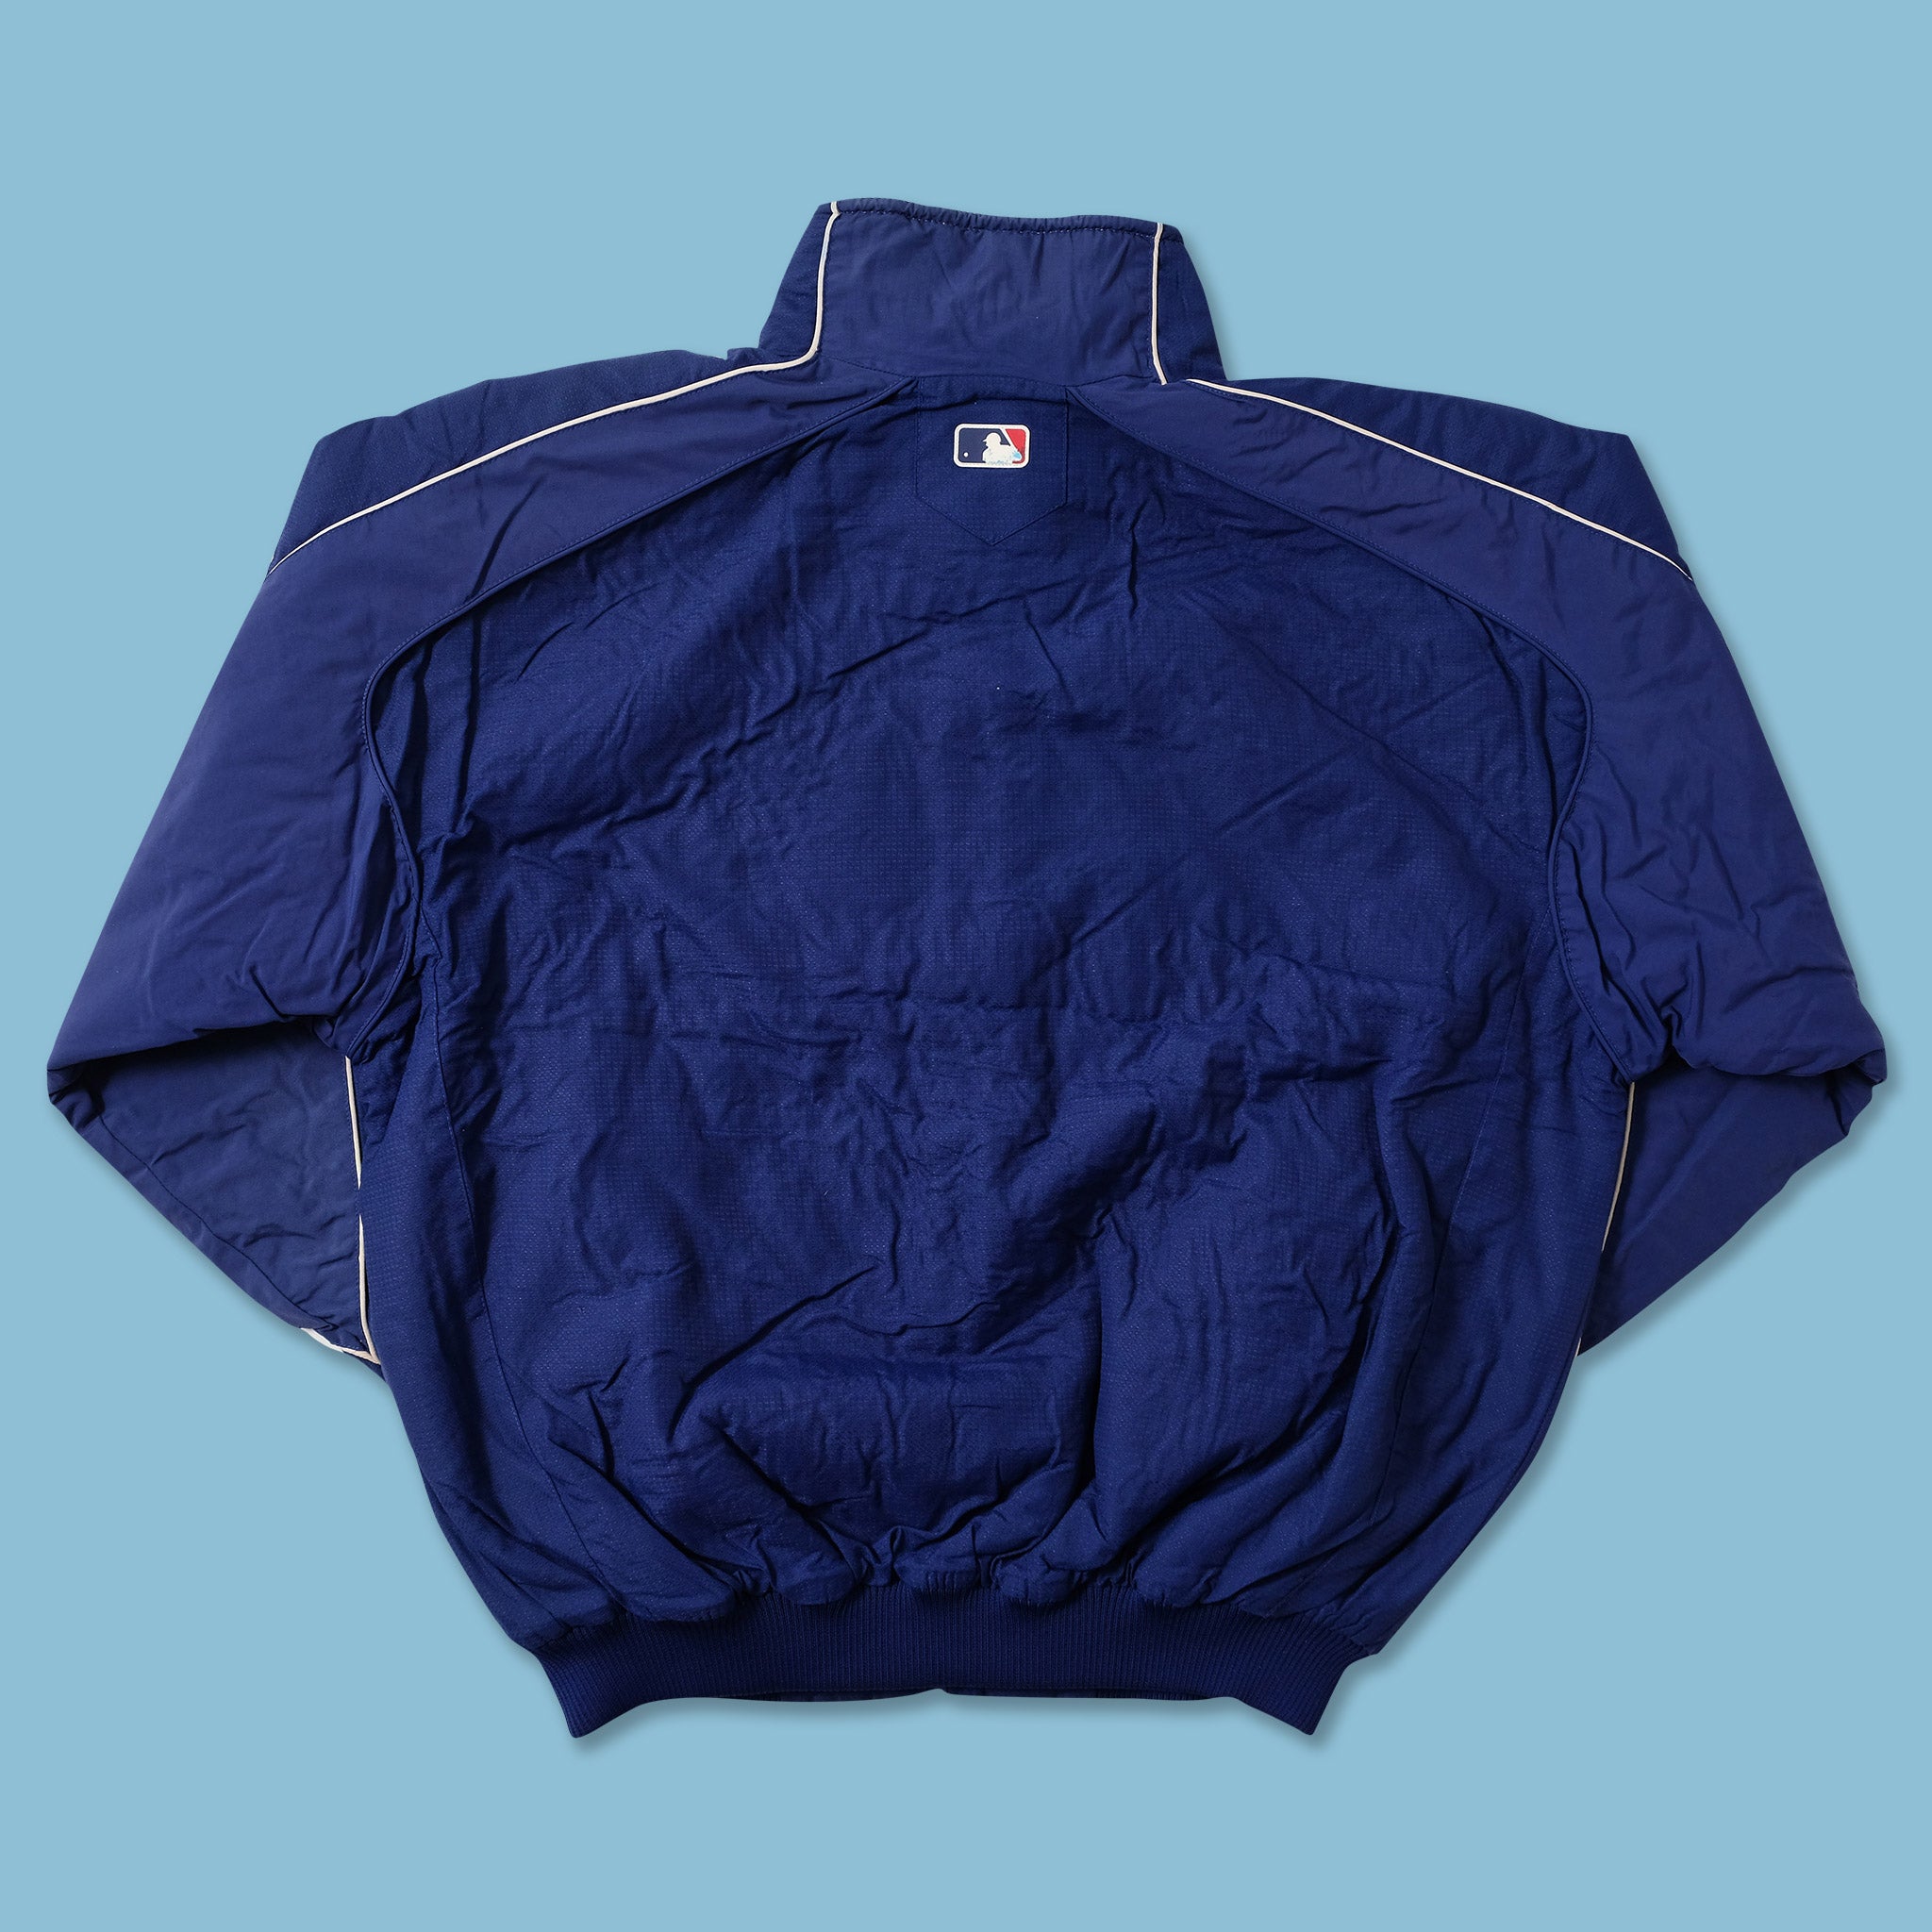 Vintage Dodgers Windbreaker Jacket Name: rich 